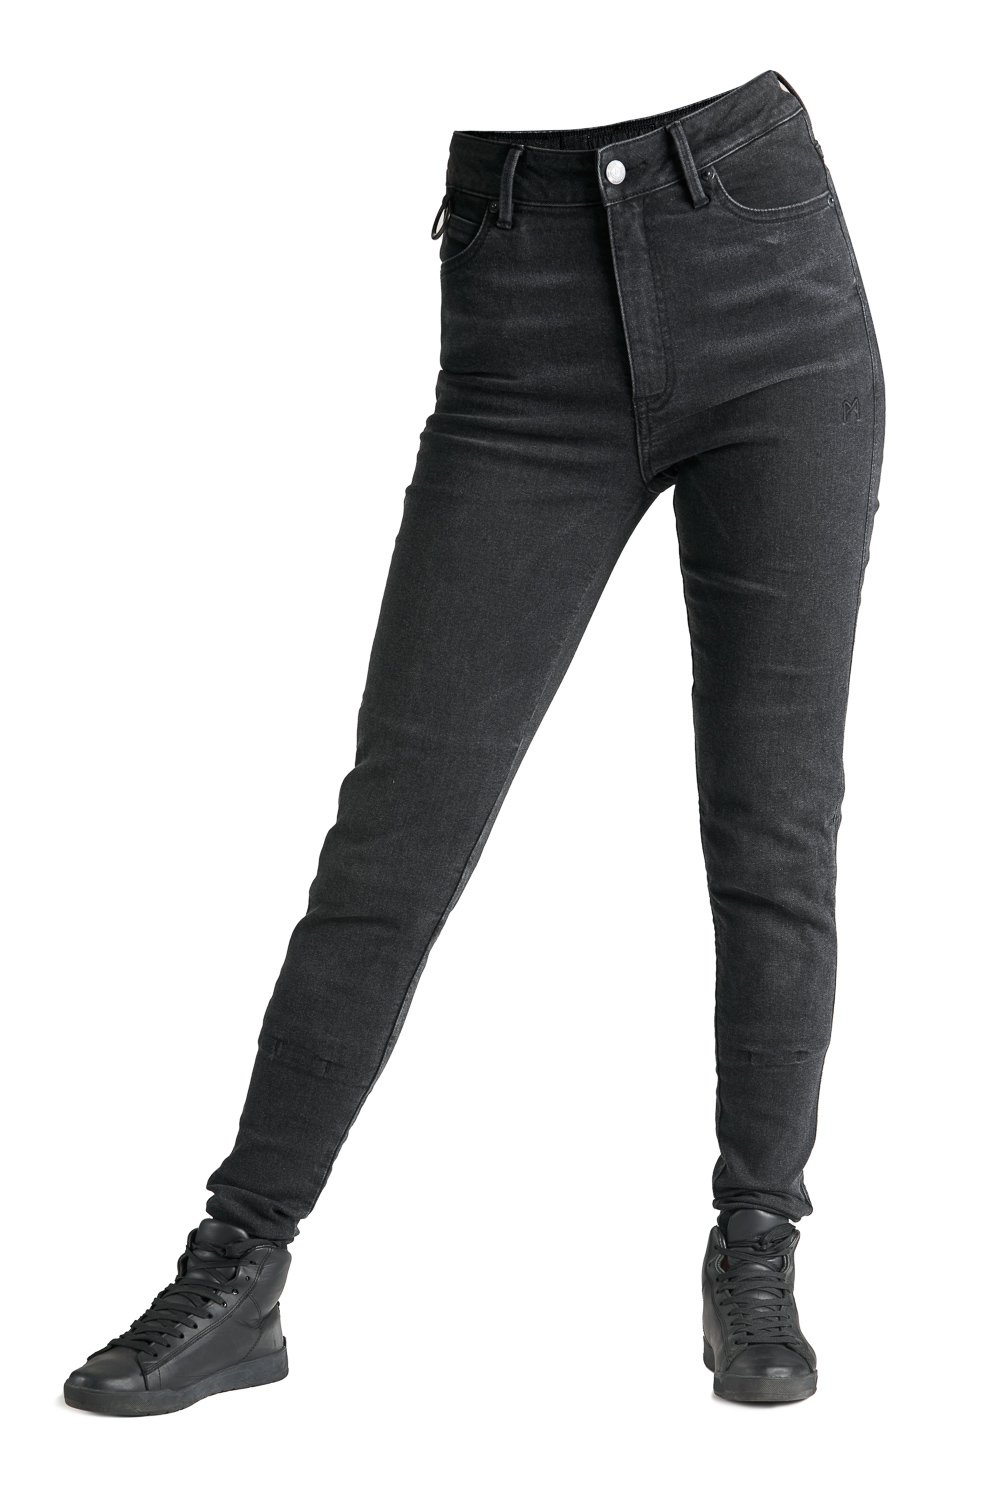 Image of Pando Moto Kusari Cor 01 Women Motorcycle Jeans Skinny-Fit Cordura Size W31/L32 EN